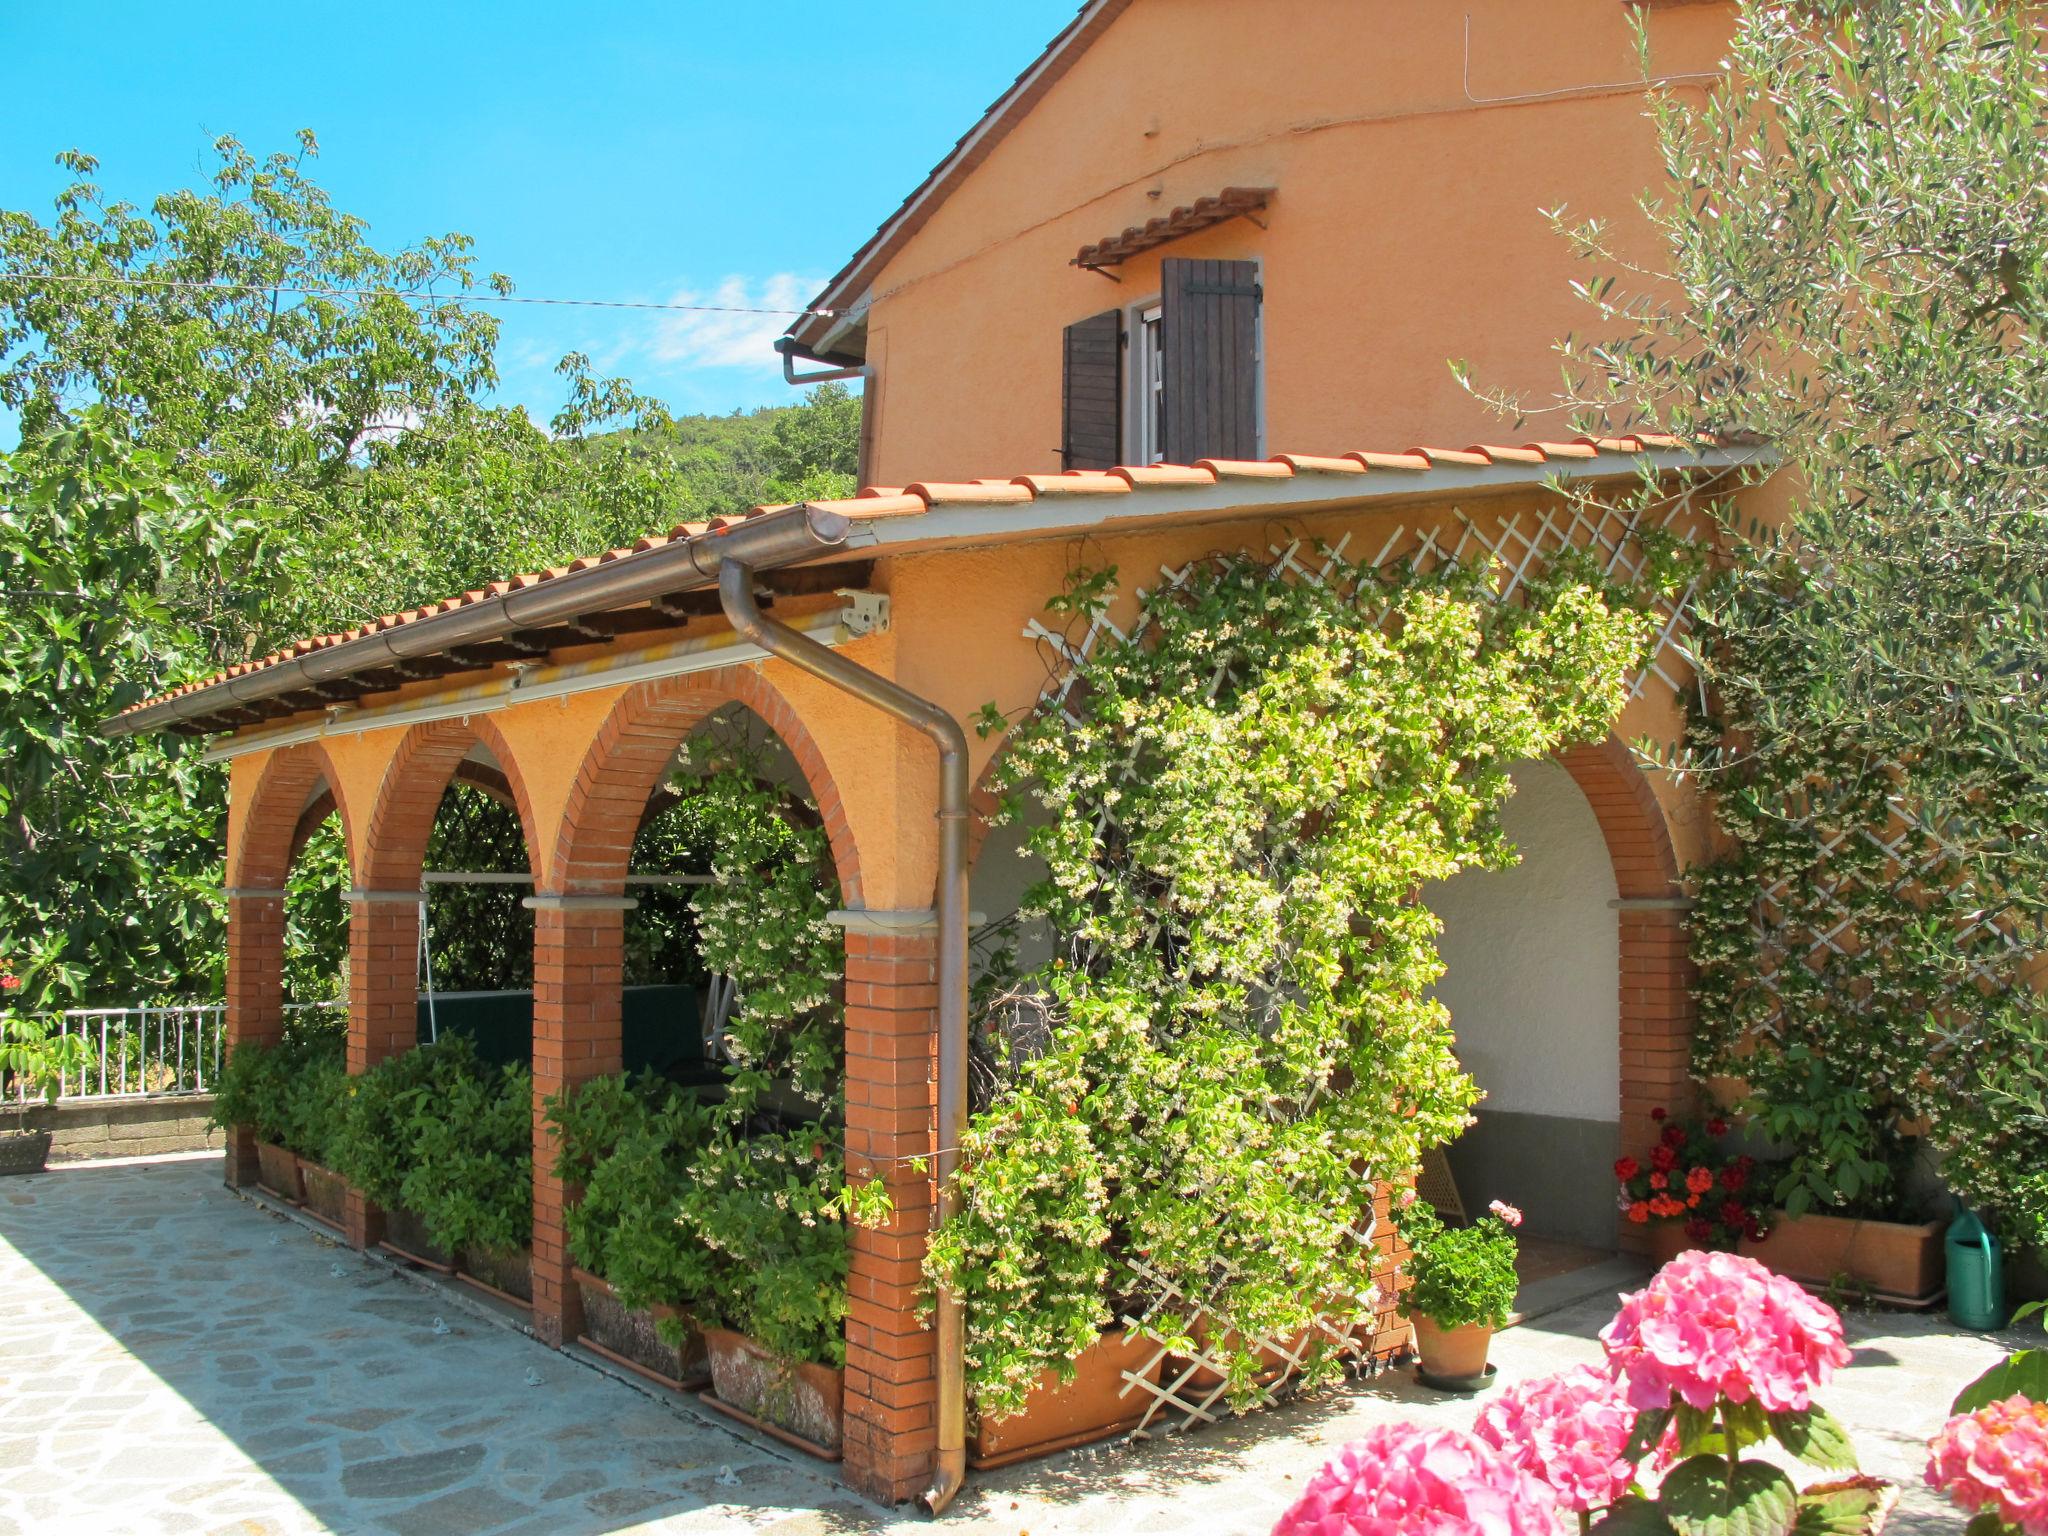 Photo 2 - Maison de 3 chambres à Castiglion Fiorentino avec piscine privée et jardin